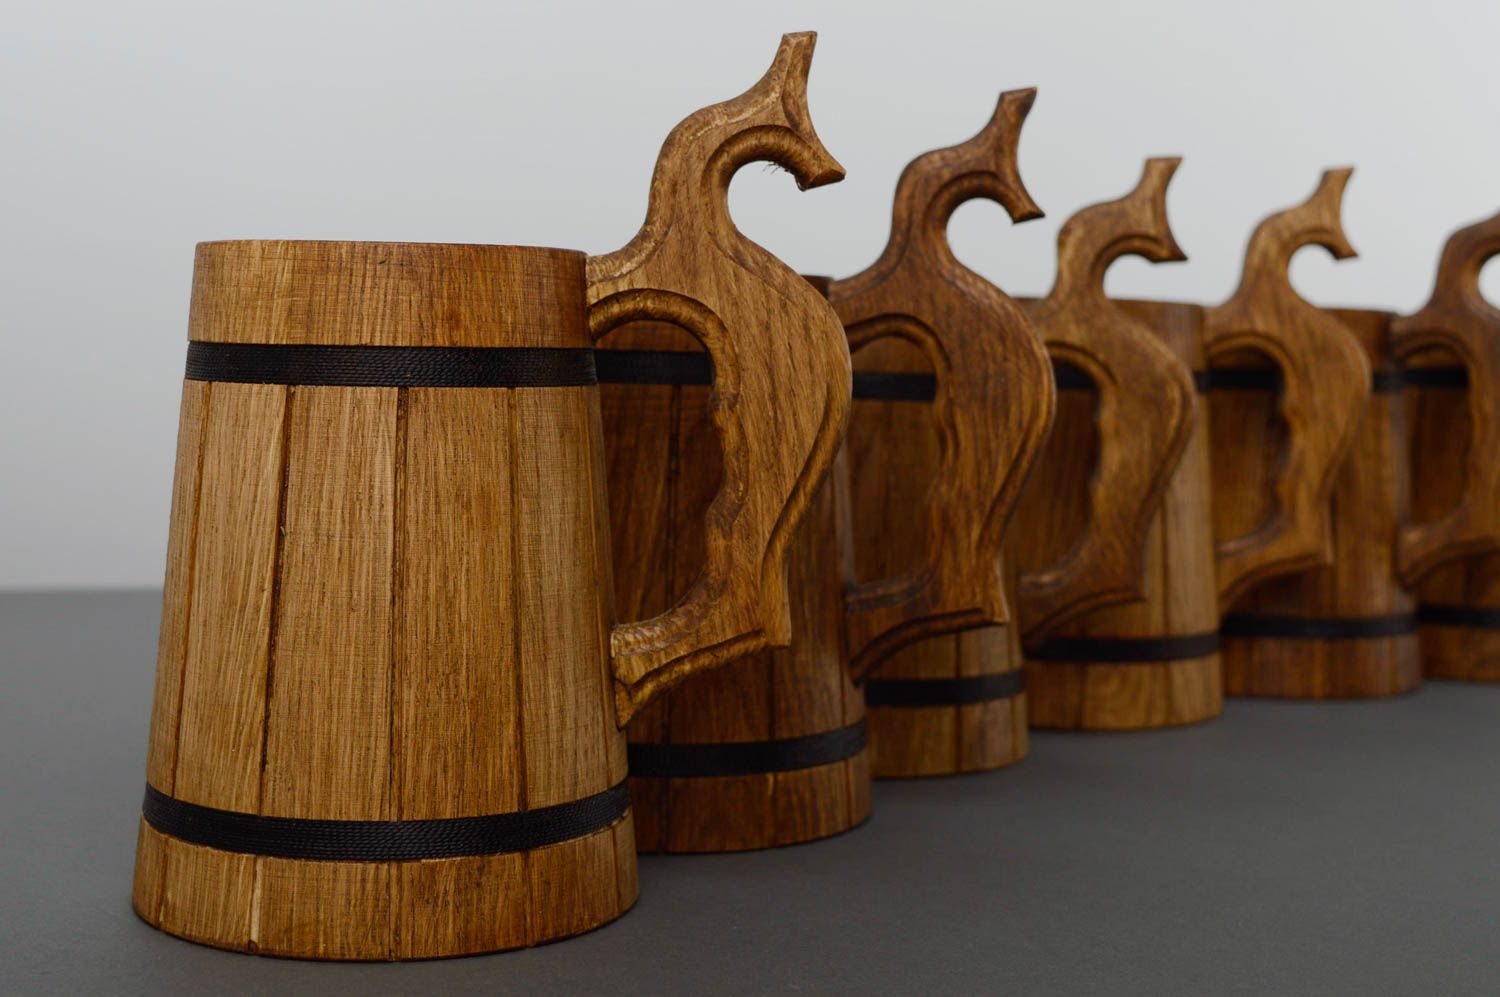 A set of handmade wooden beer mugs.